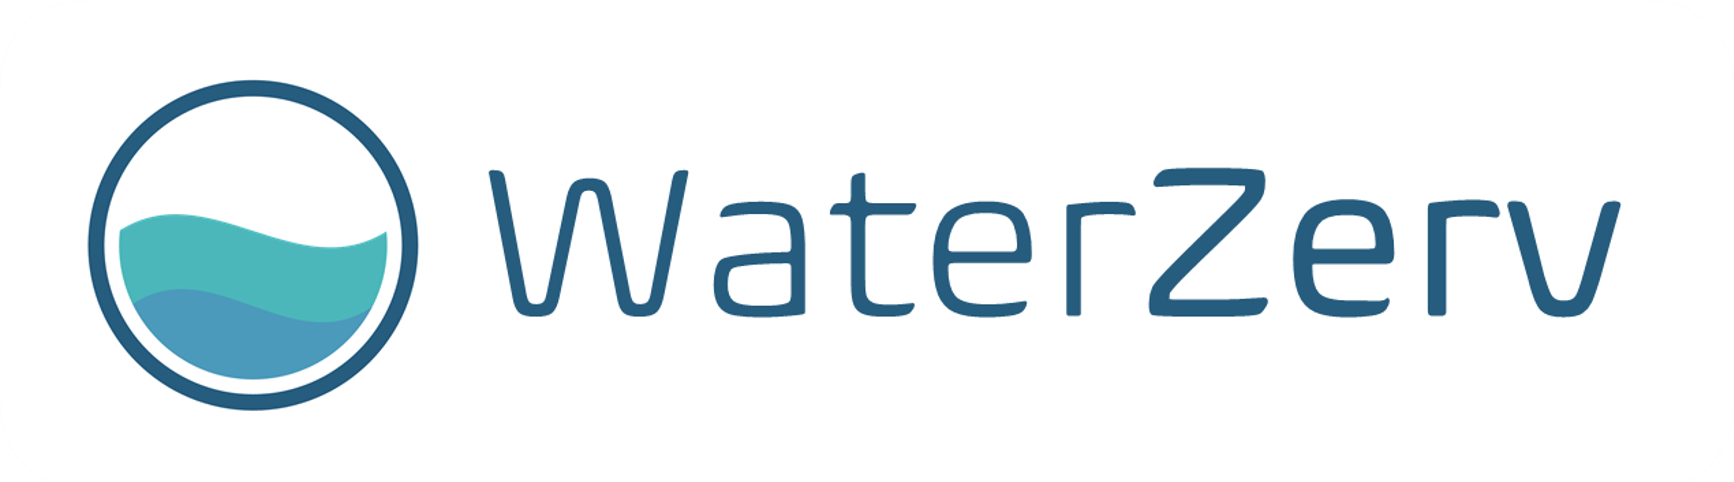 WaterZerv logo okt 2020